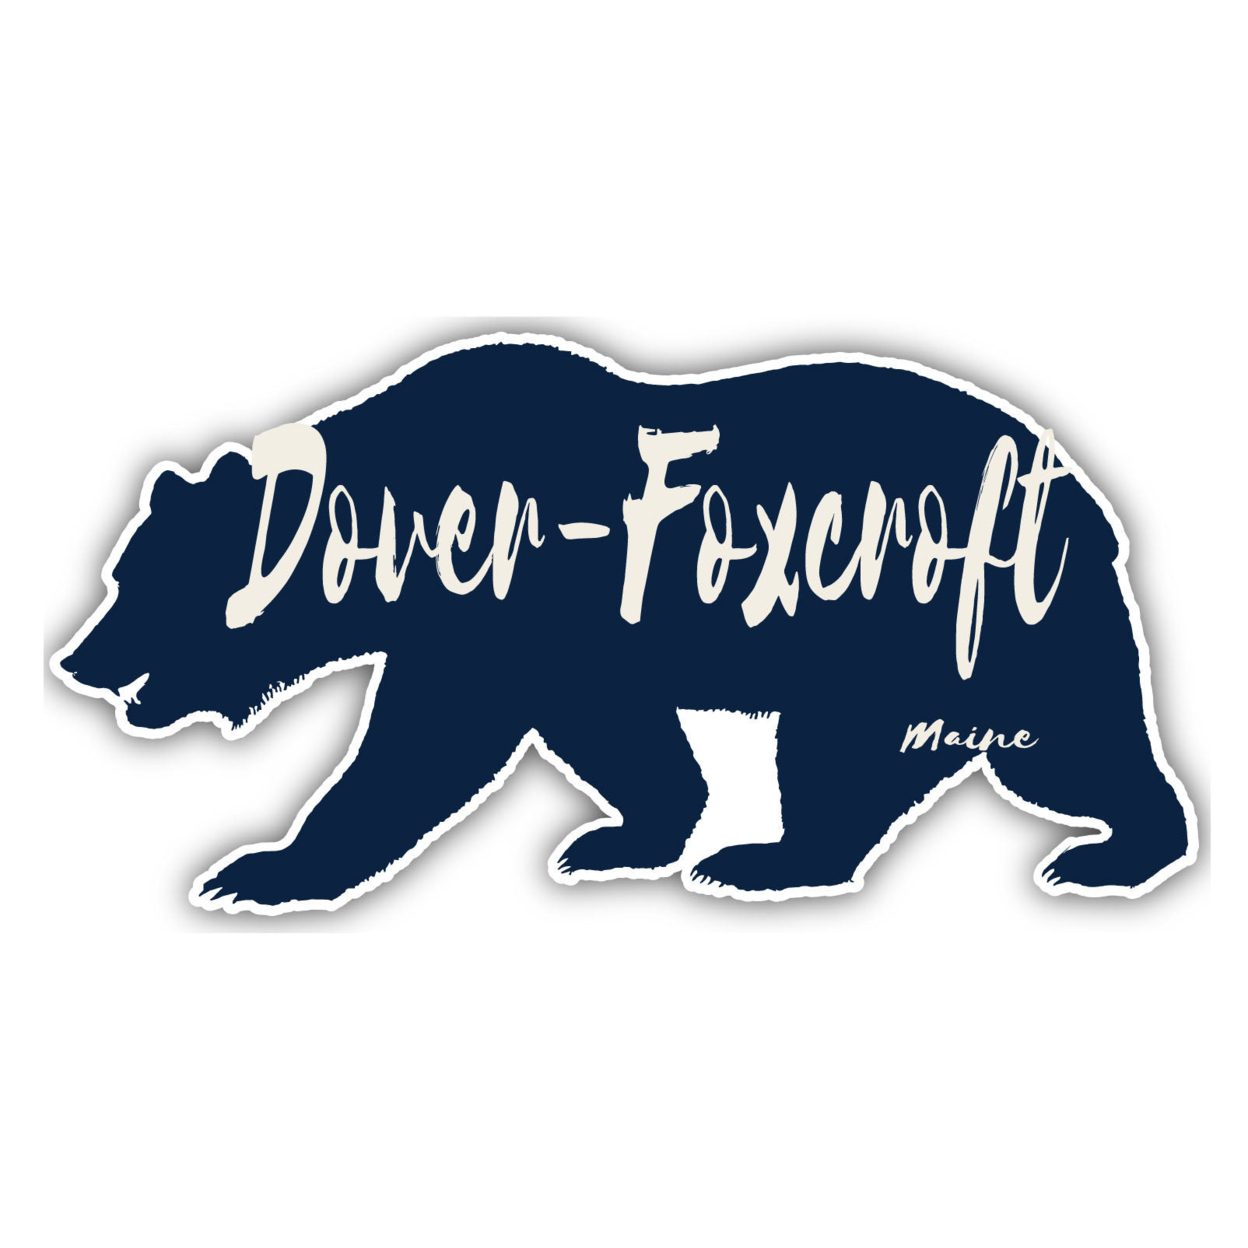 Dover-Foxcroft Maine Souvenir Decorative Stickers (Choose Theme And Size) - Single Unit, 2-Inch, Bear